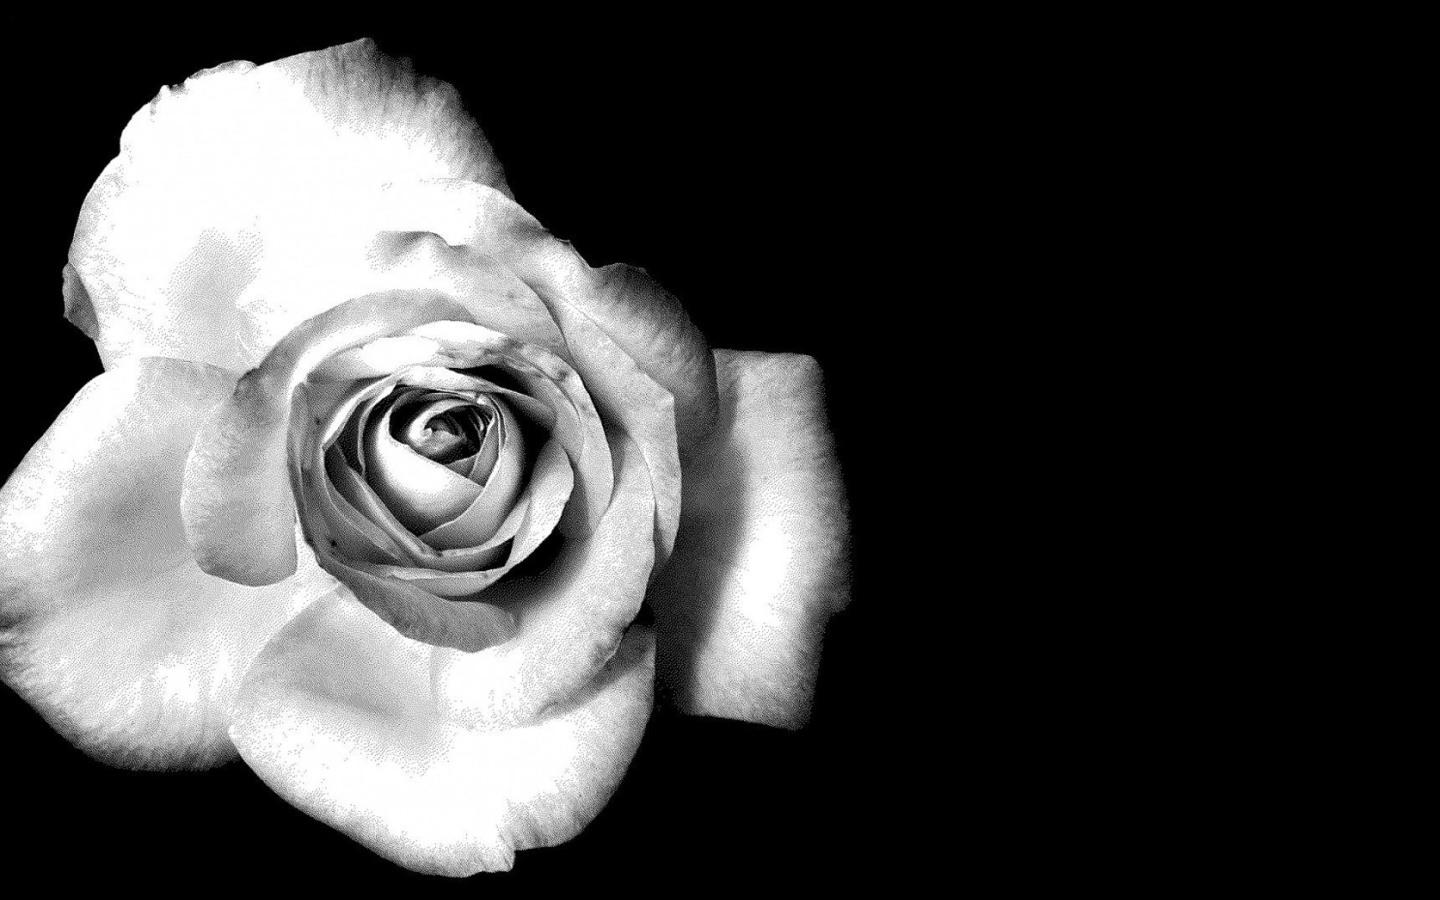 hd bianco della carta da parati,bianca,fotografia in bianco e nero,bianco e nero,nero,fiore